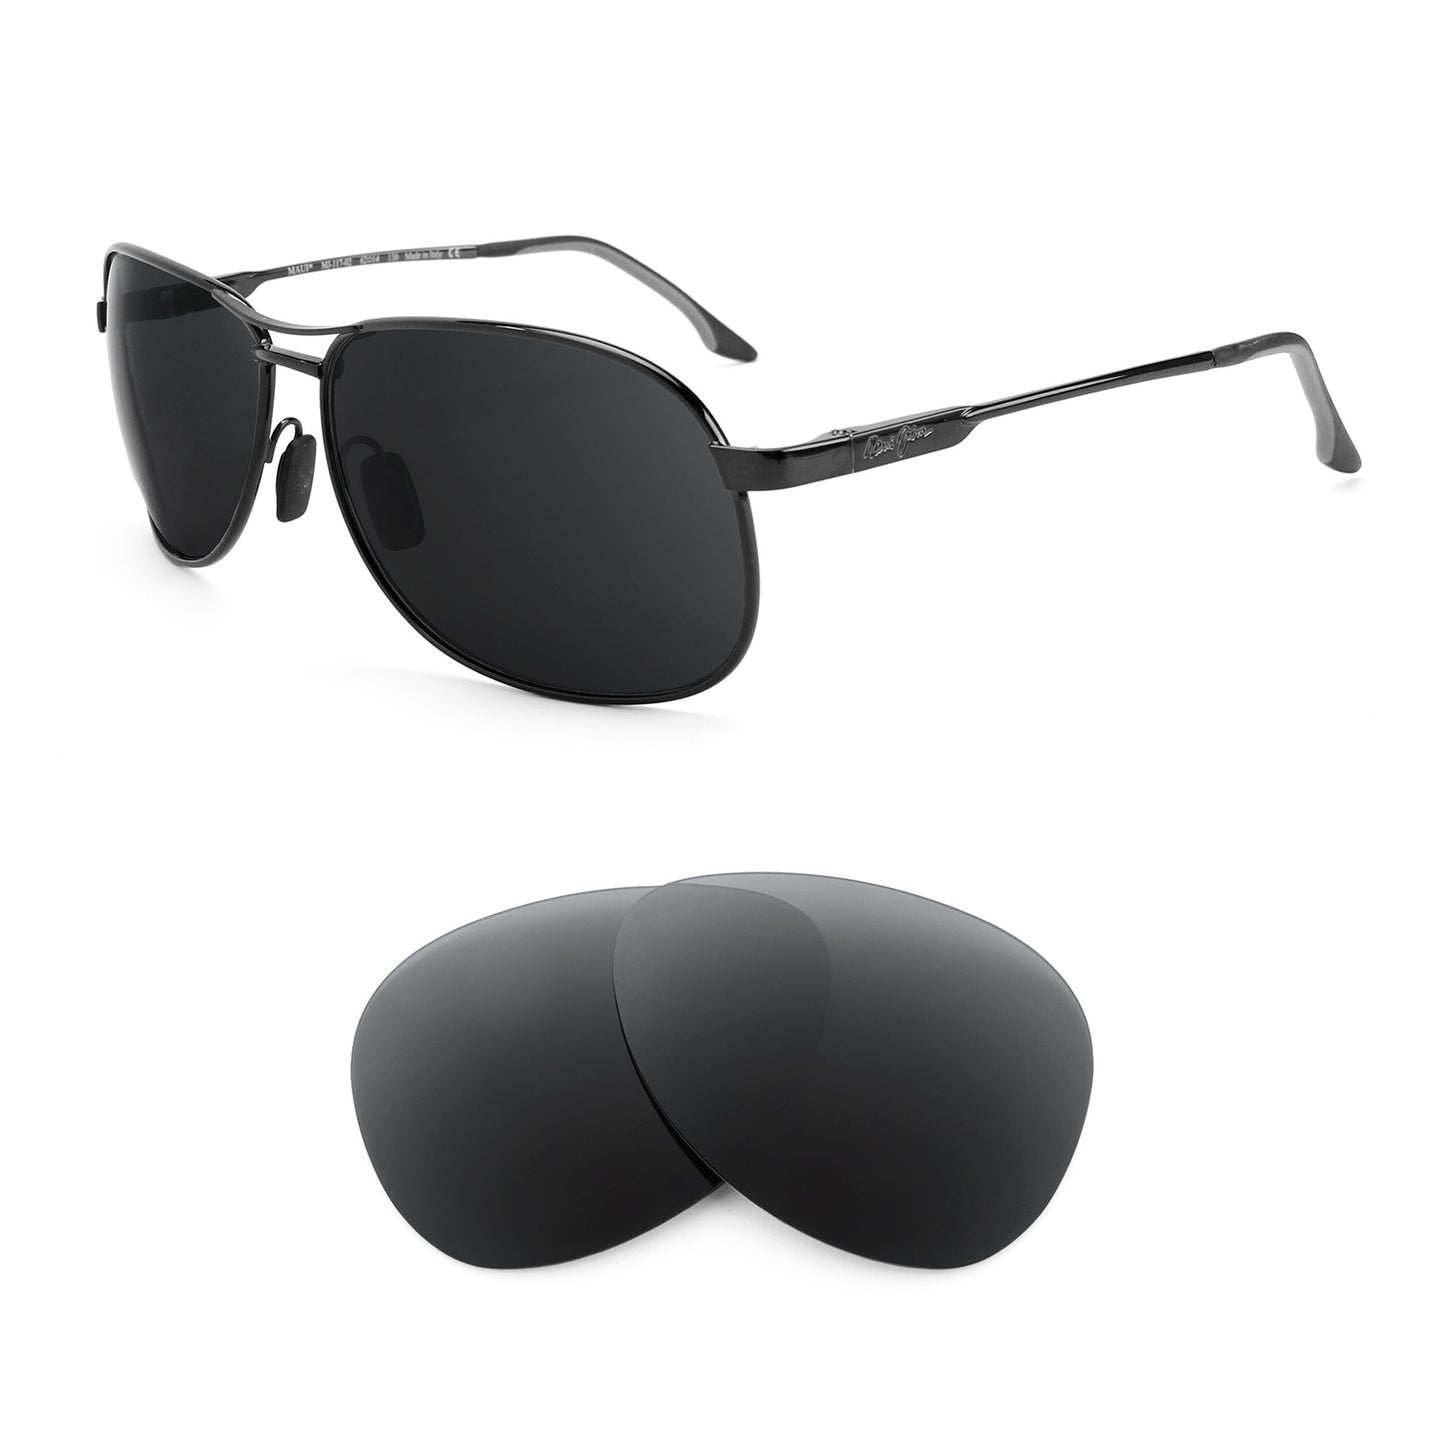 Maui Jim Akoni MJ117 sunglasses with replacement lenses